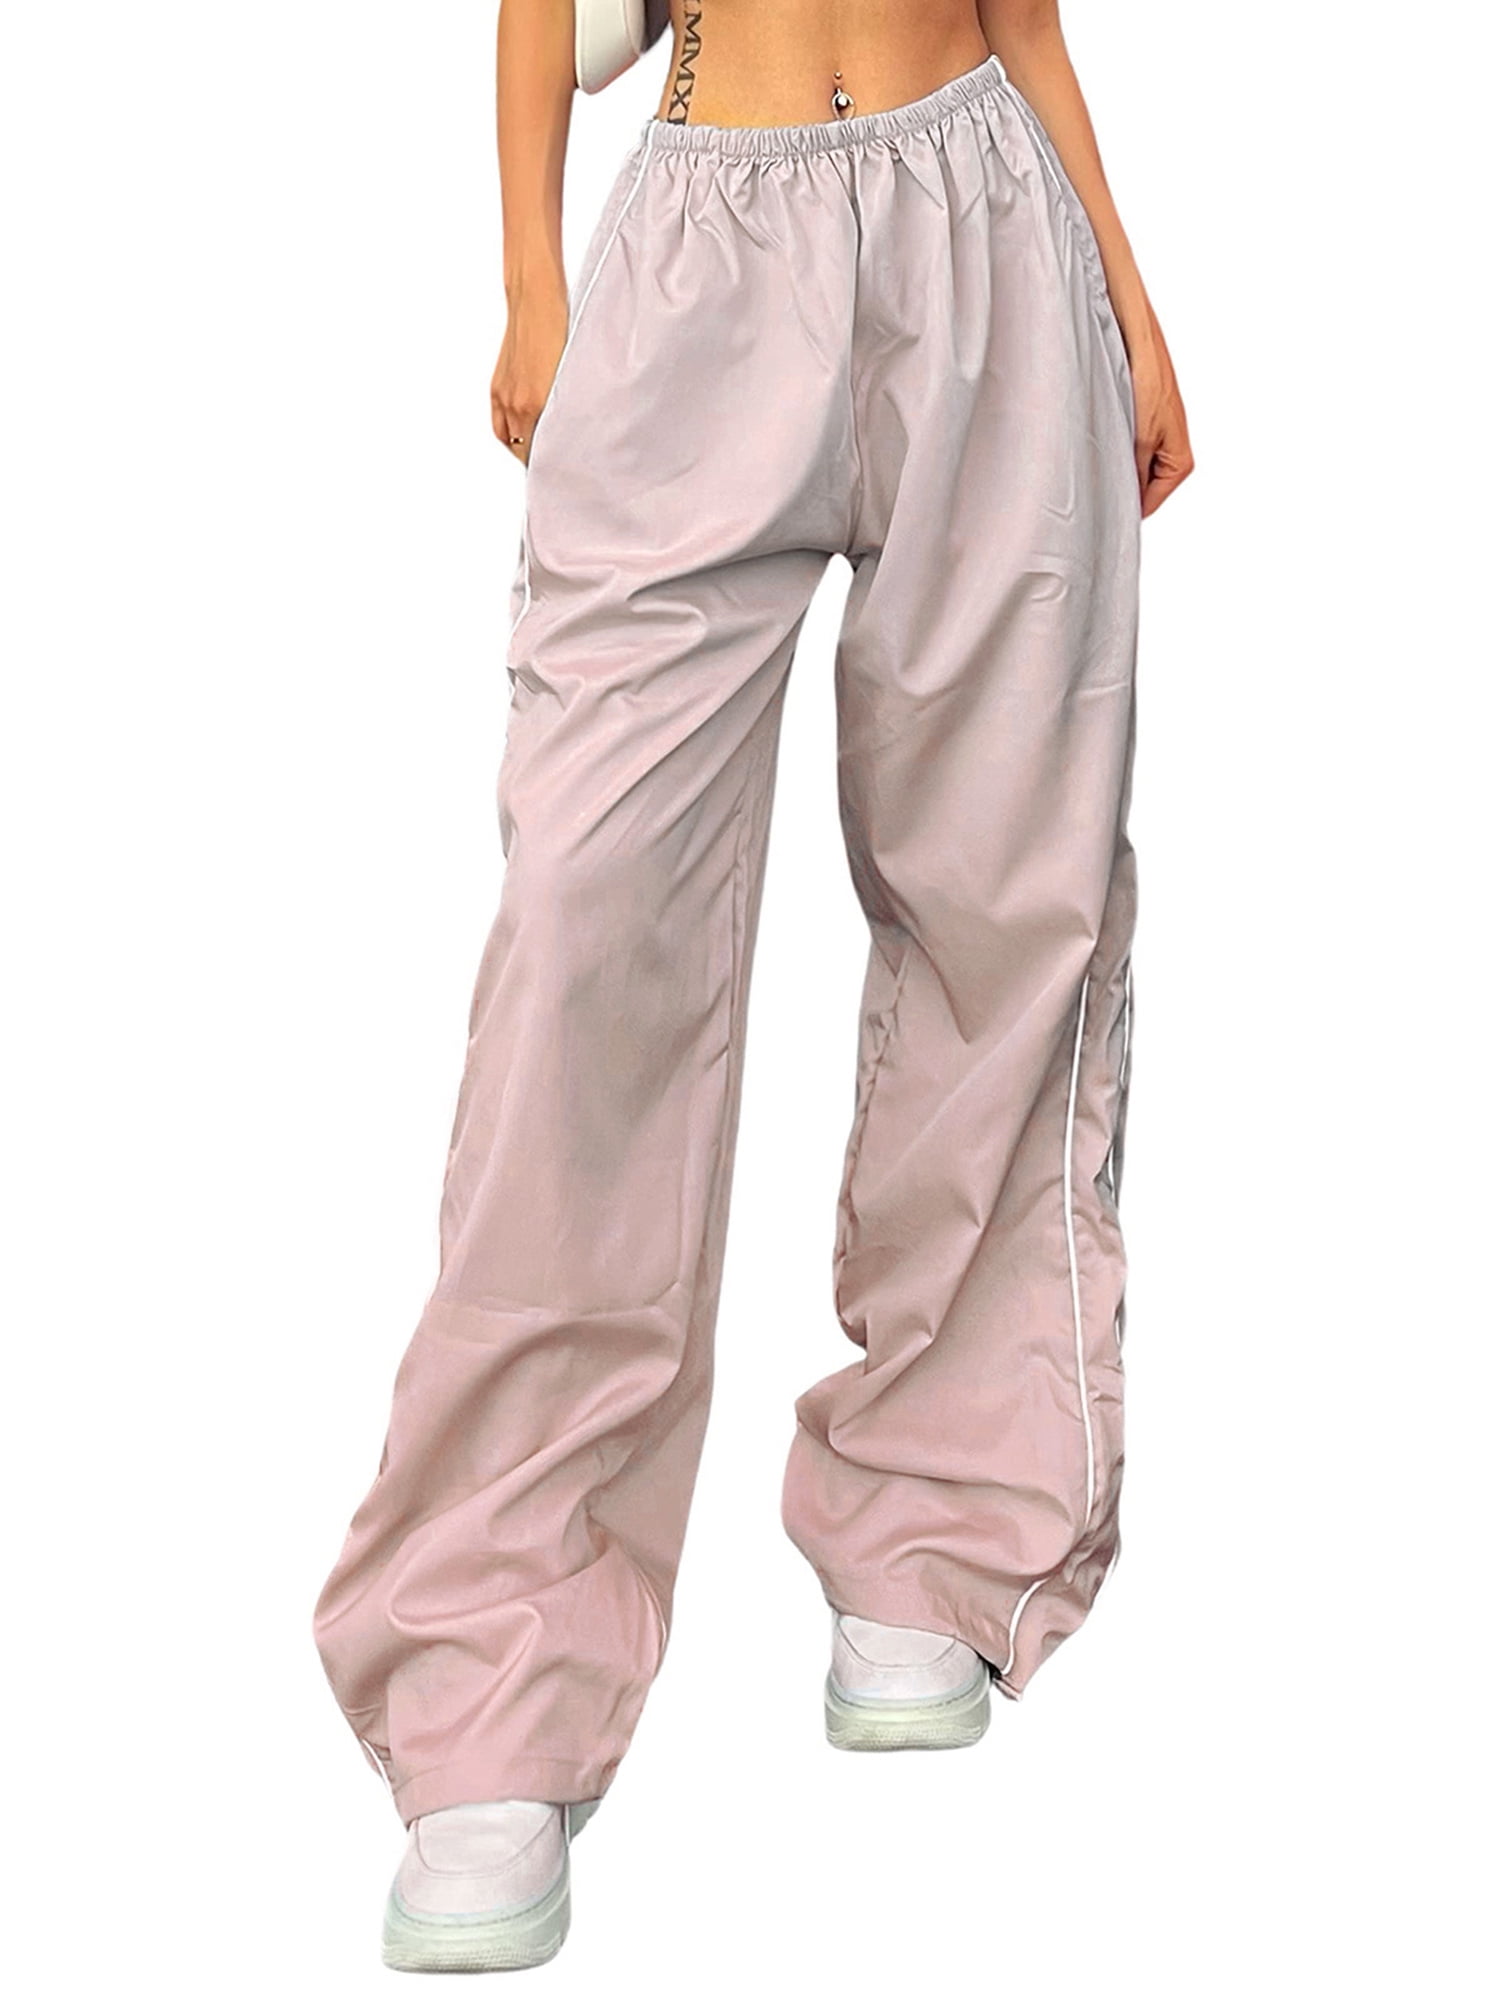 NHCDFA Parachute Pants for Women, Cargo Pants Women Baggy, Y2K Low